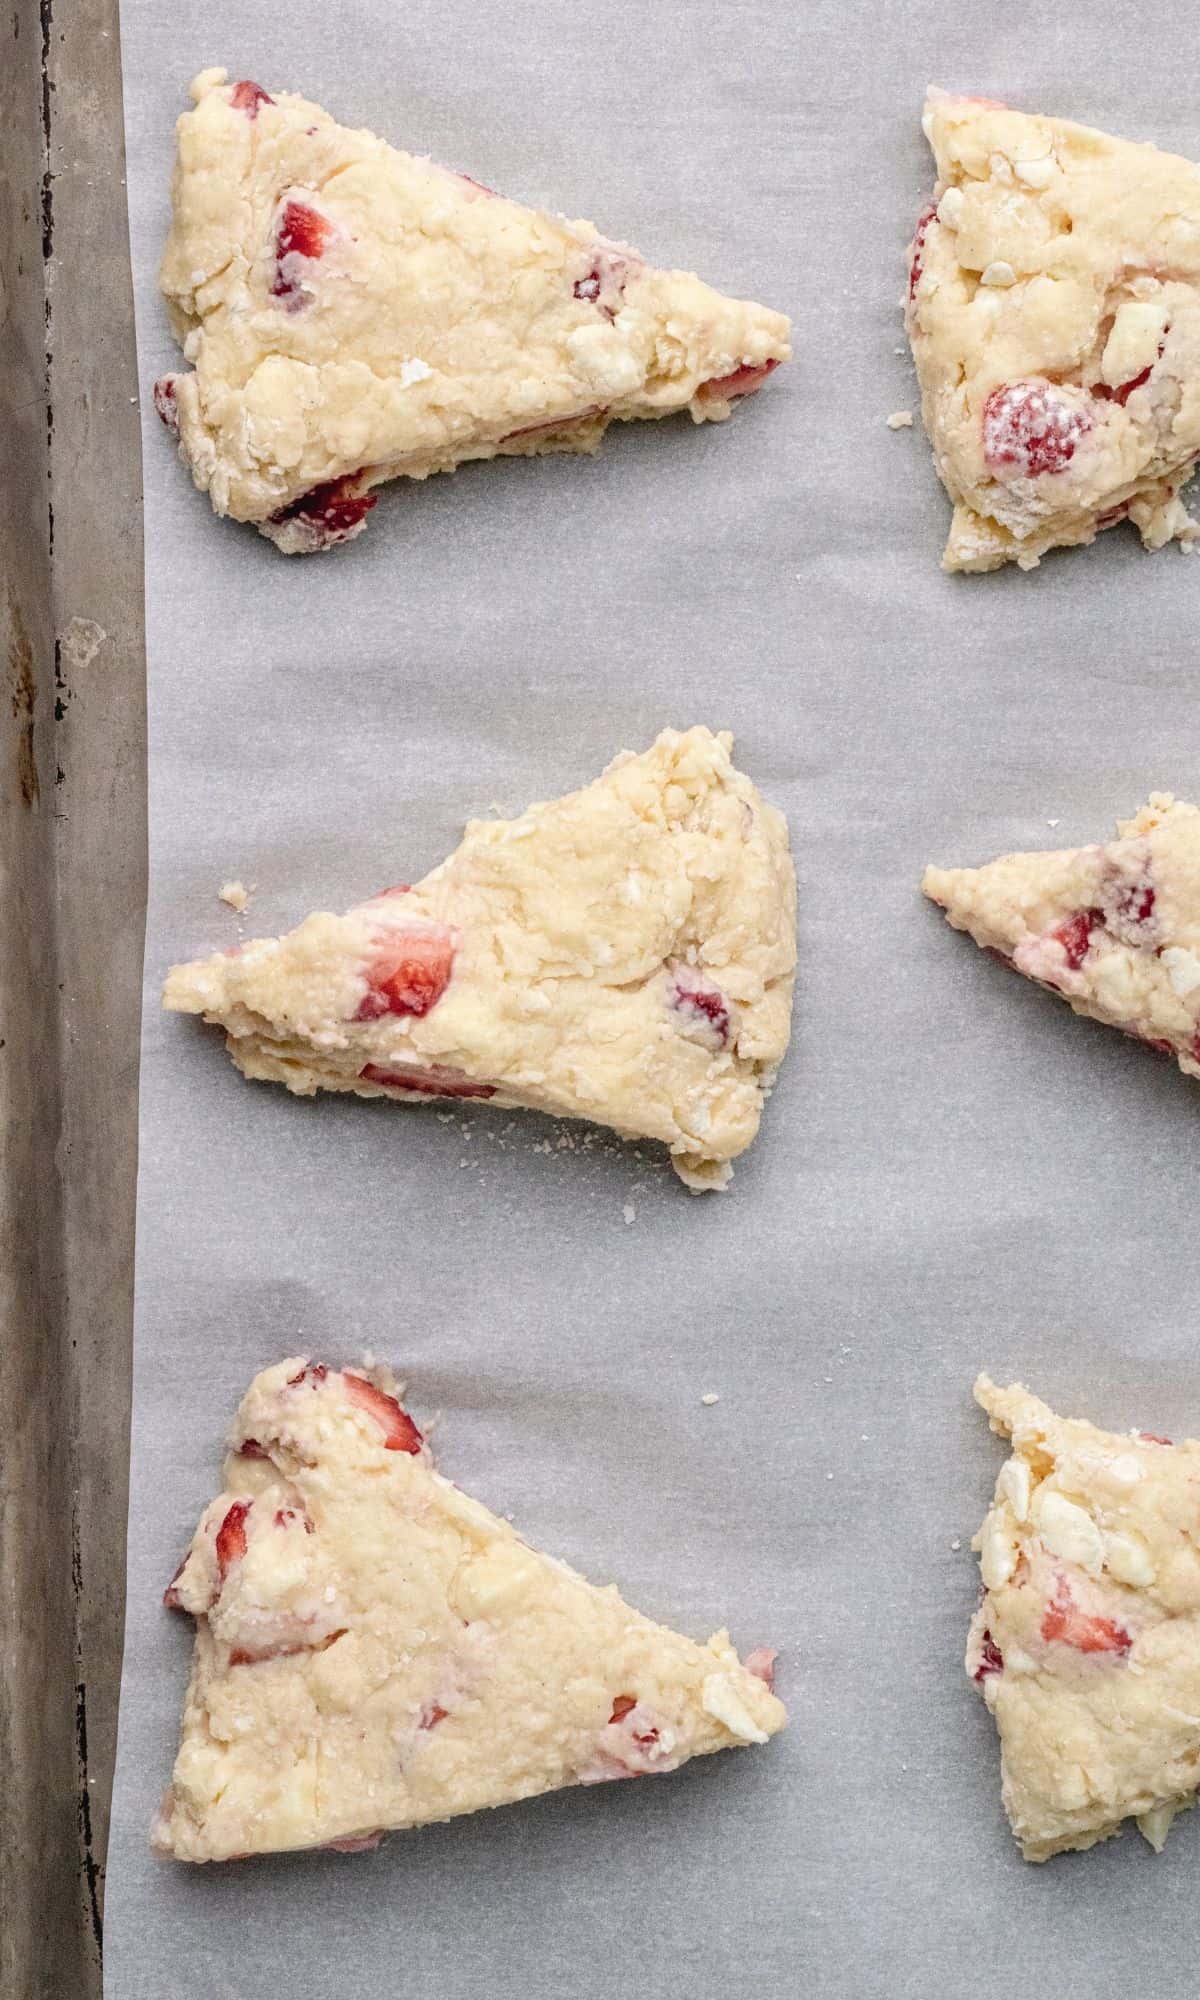 Strawberry buttermilk scones on baking sheet piror to baking.